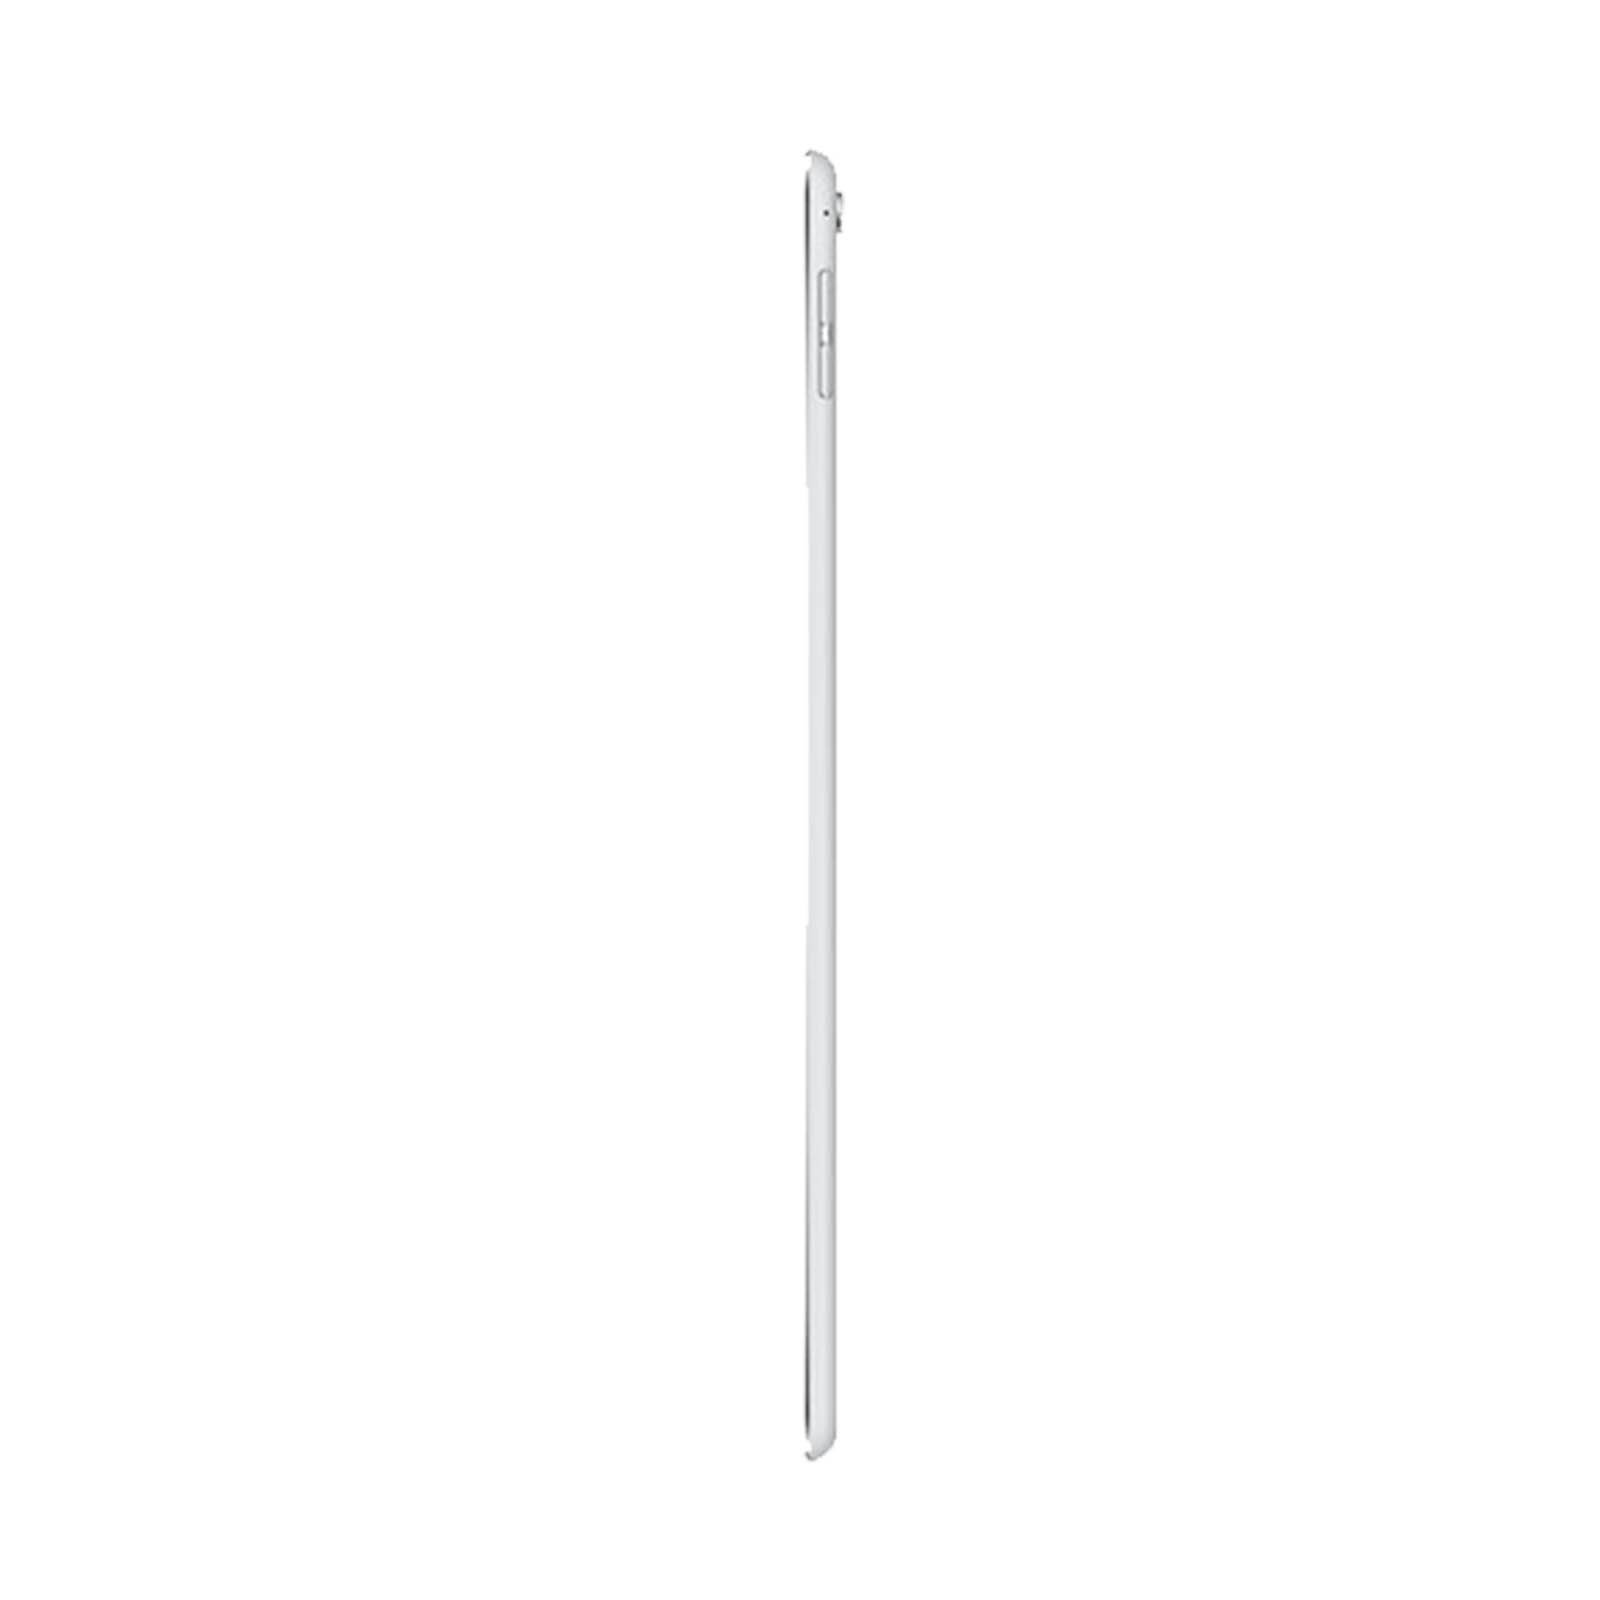 iPad Pro 9.7 Inch 256GB Silver Pristine - Unlocked